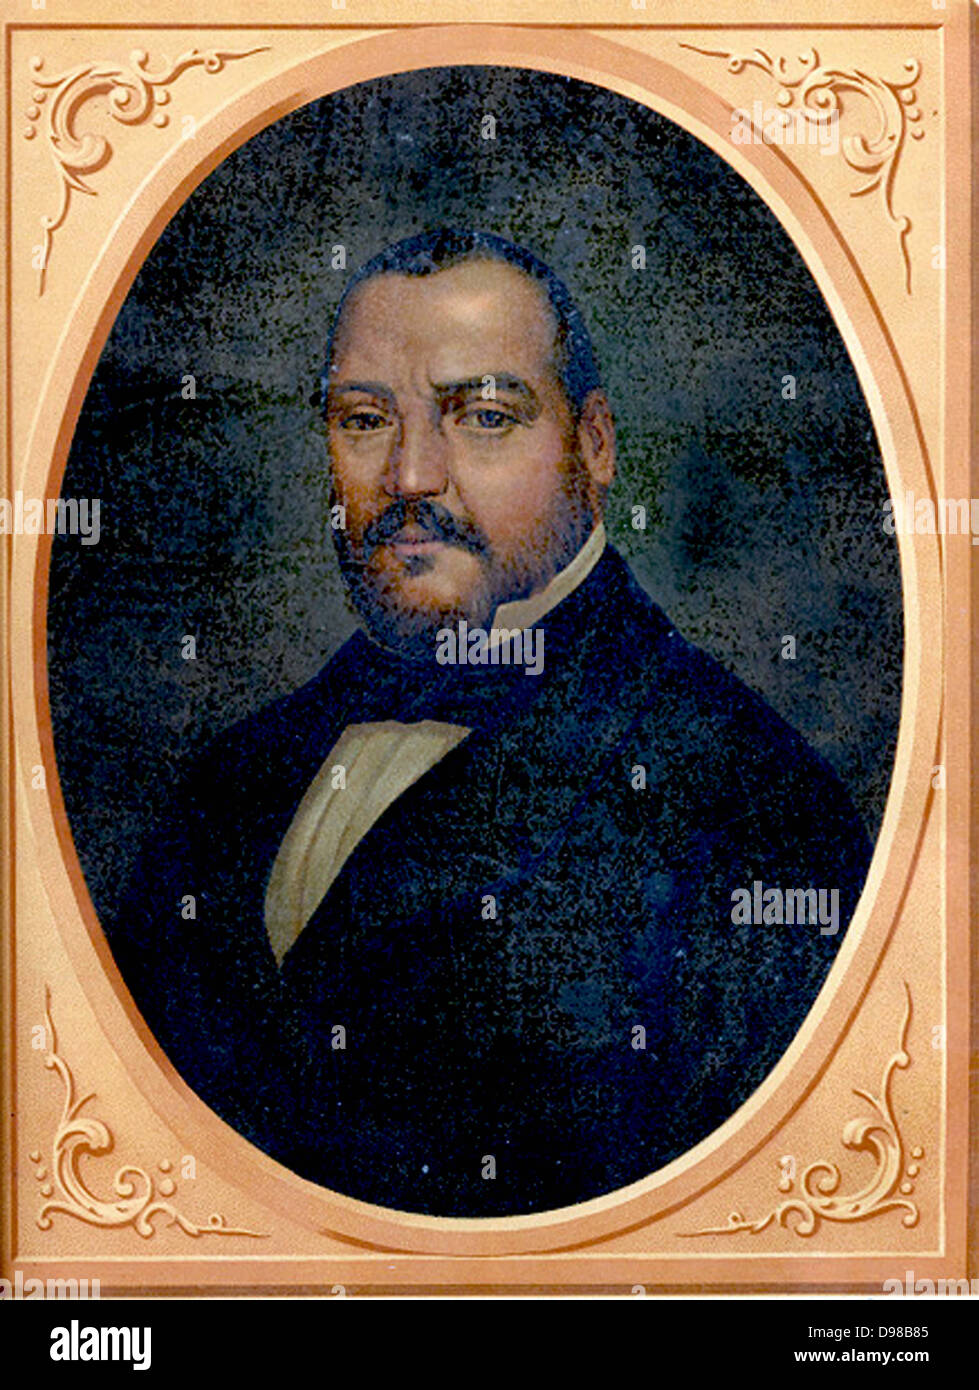 Ignacio Comonfort (1812-1863), mexikanischer Politiker und Soldaten. Presidentof Mexiko 15. September 1855-21 Januar 1858, wenn er resigniert. Stockfoto